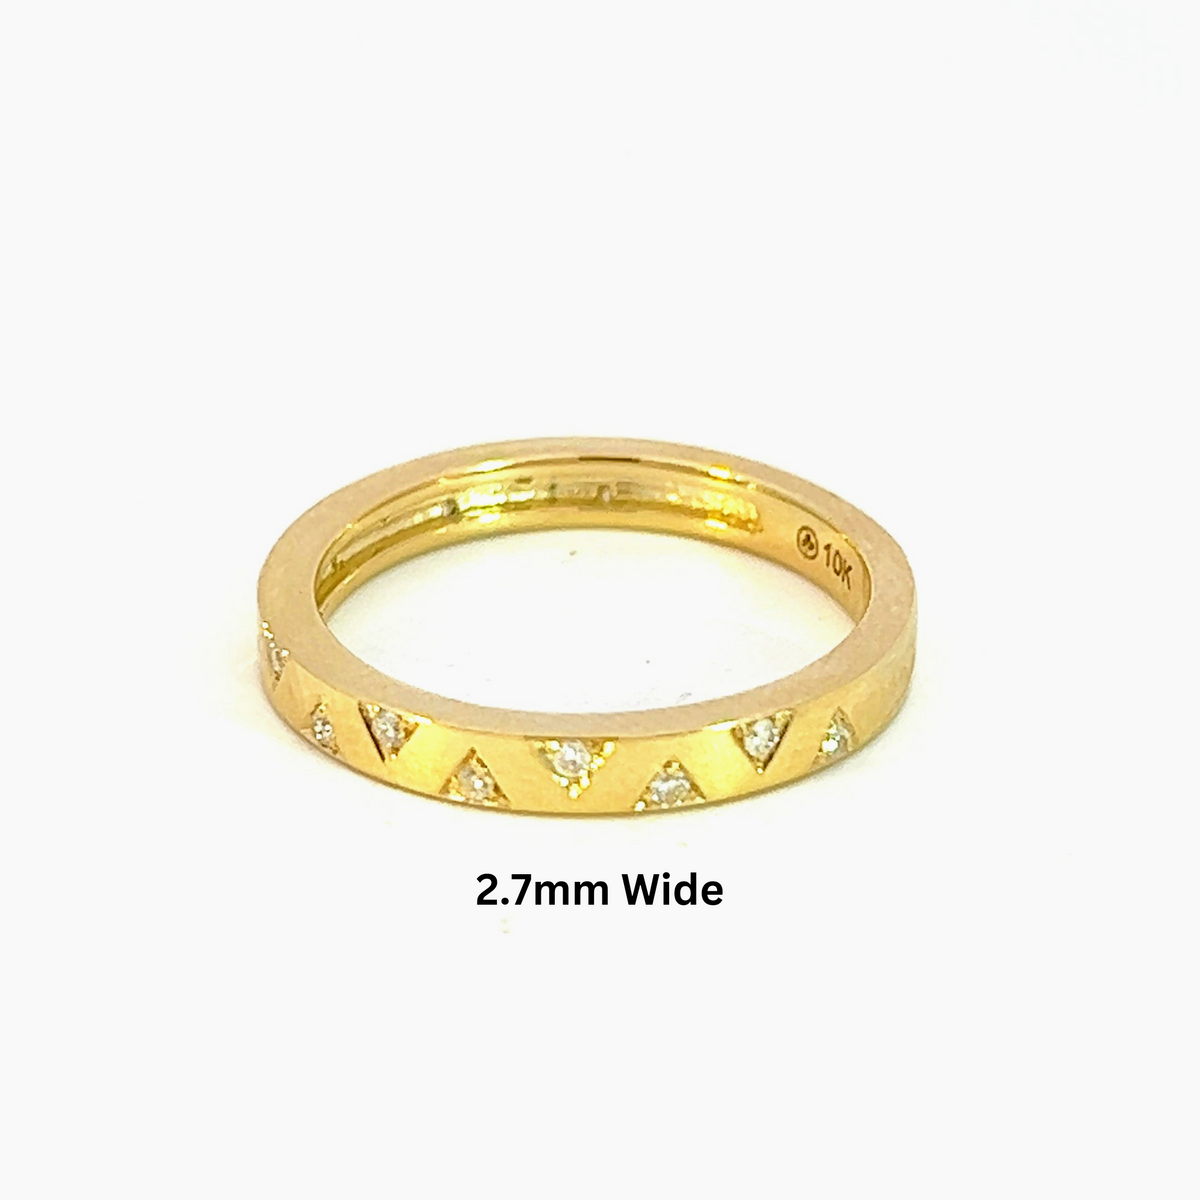 Banda de diamantes de 0,10 quilates en oro amarillo de 10 quilates - talla 6,5